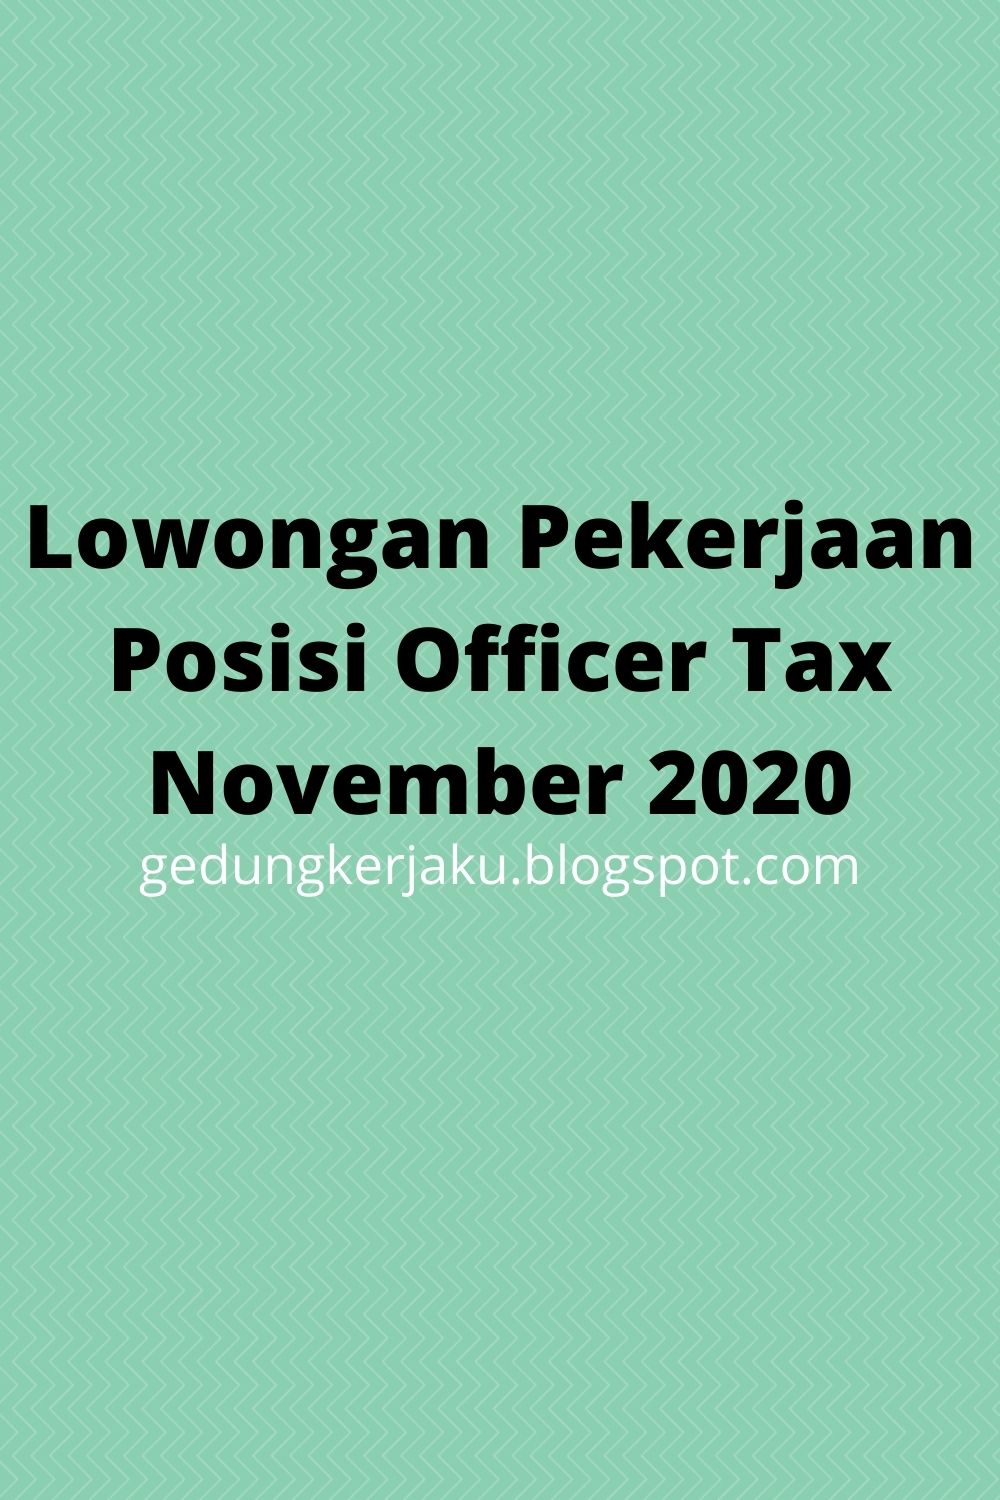 Lowongan Pekerjaan Posisi Officer Tax November 2020